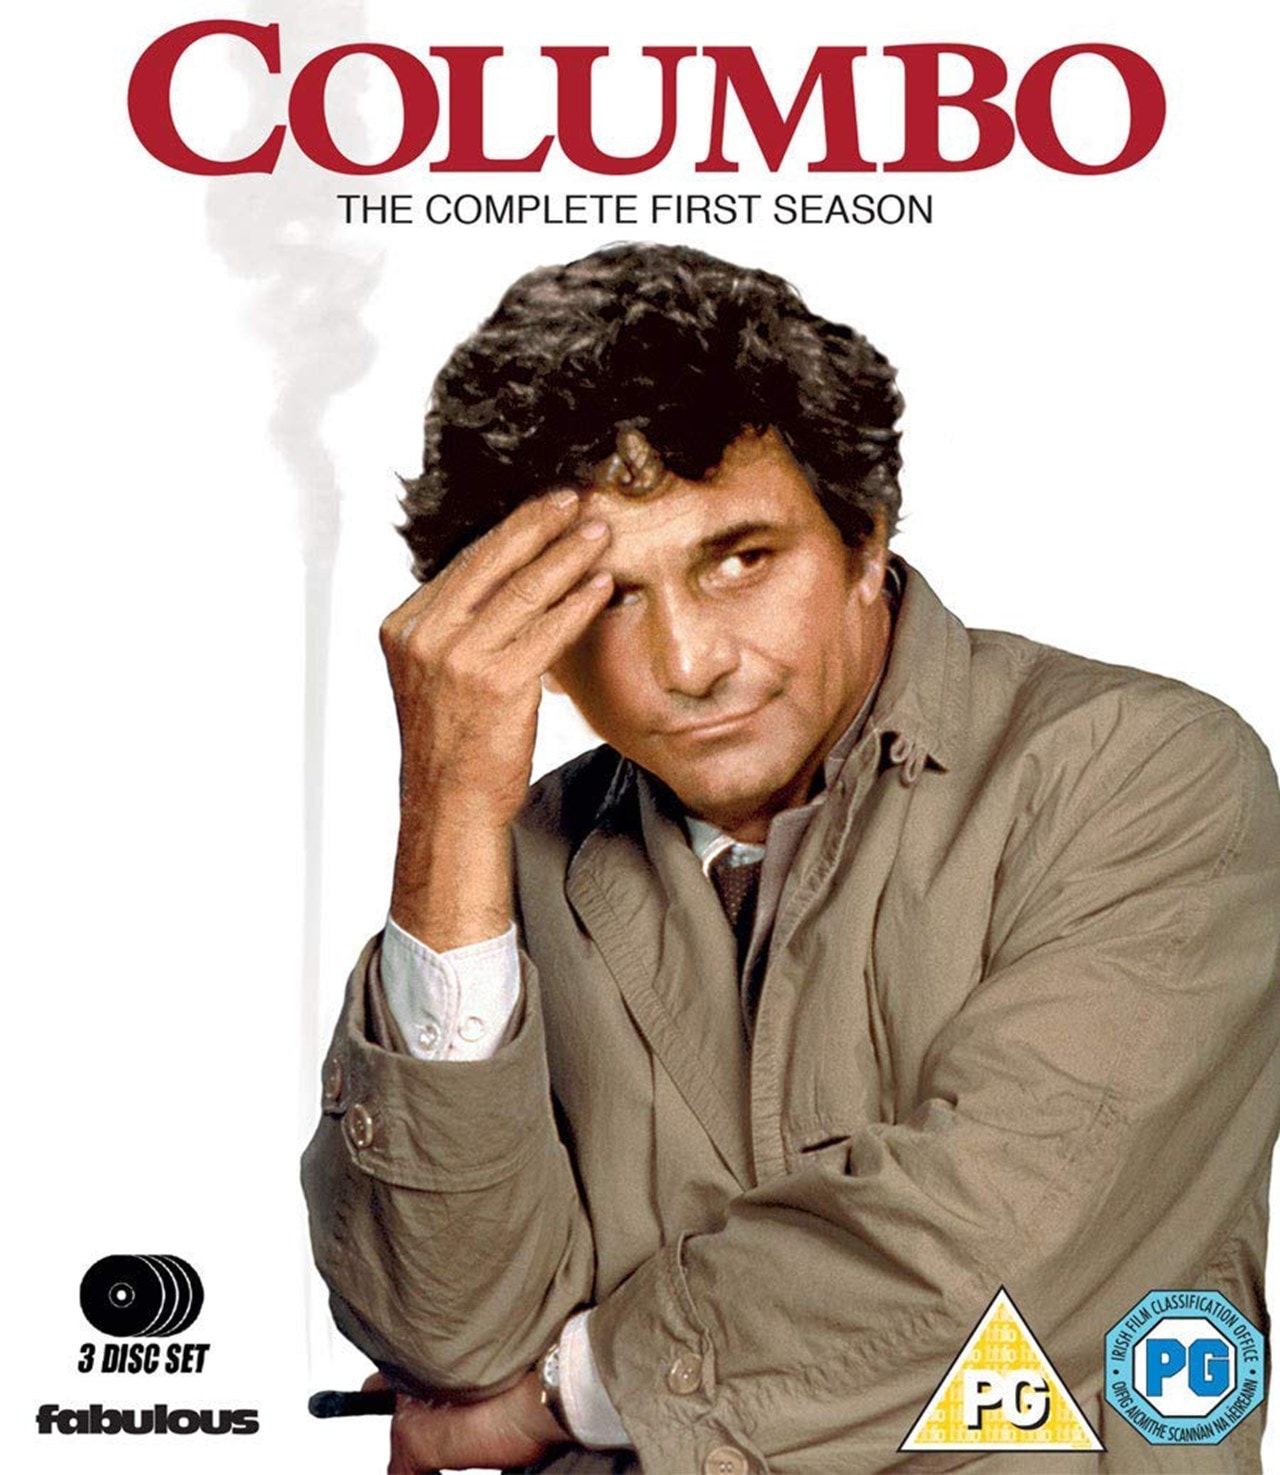 Columbo The Complete First Season Bluray Box Set Free shipping